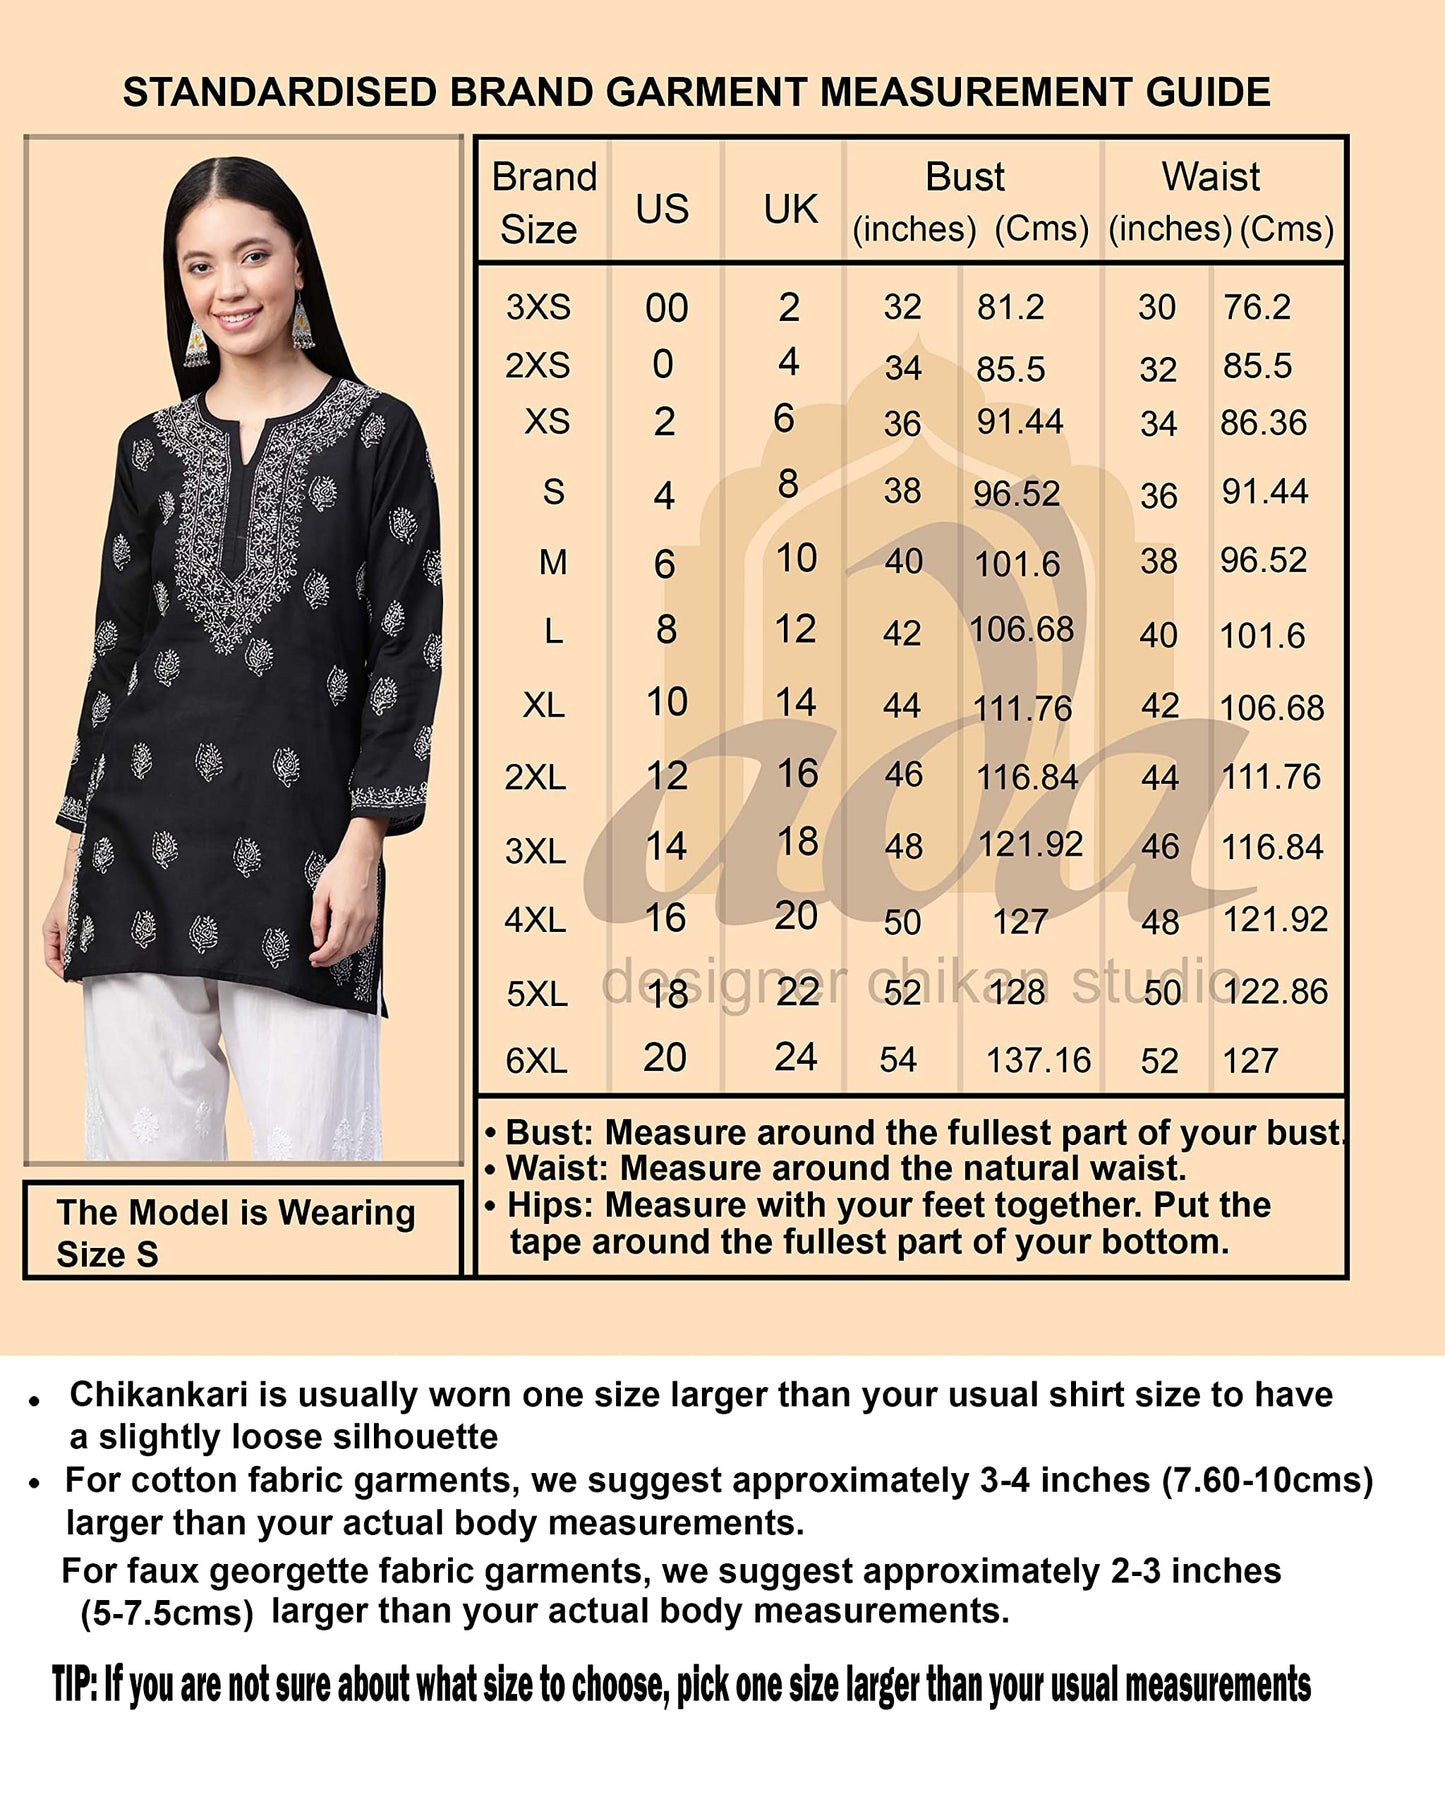 Ada Lucknowi Hand Embroidered Chikankari Sea Green Cotton Top Tunic Kurti for Women A911282 (XL)